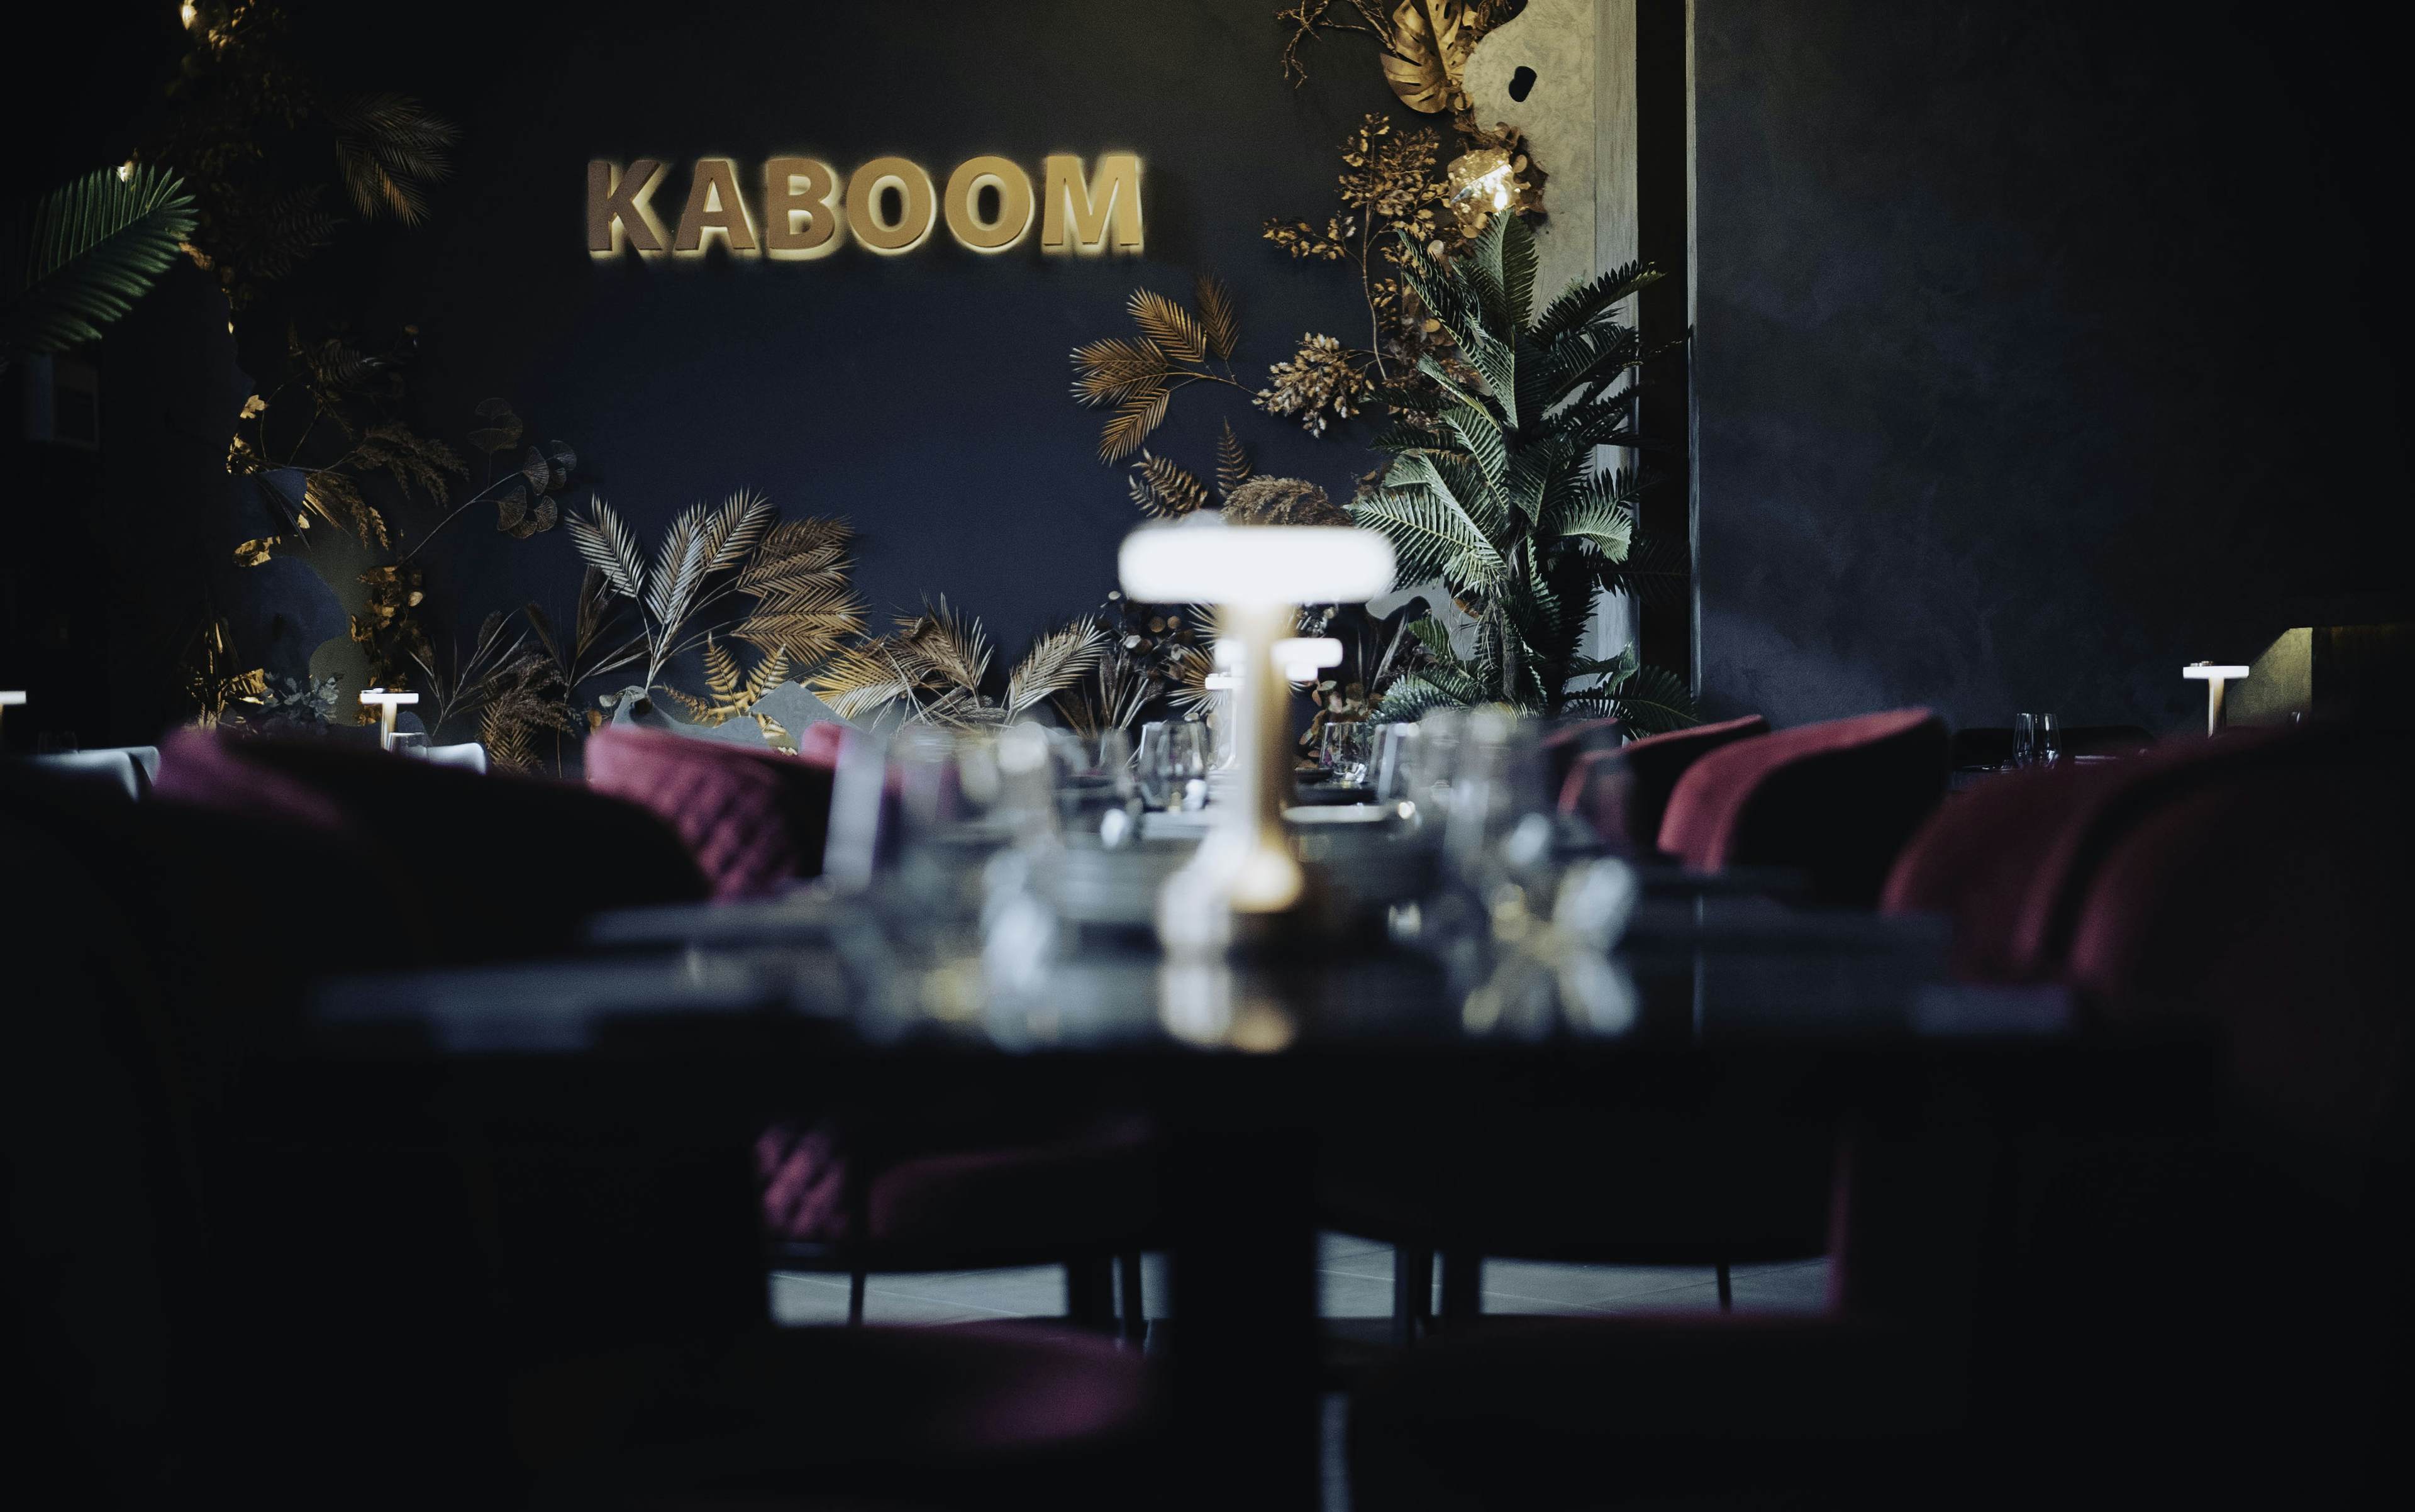 Kaboom Lounge & Restaurant - kaboom image 1